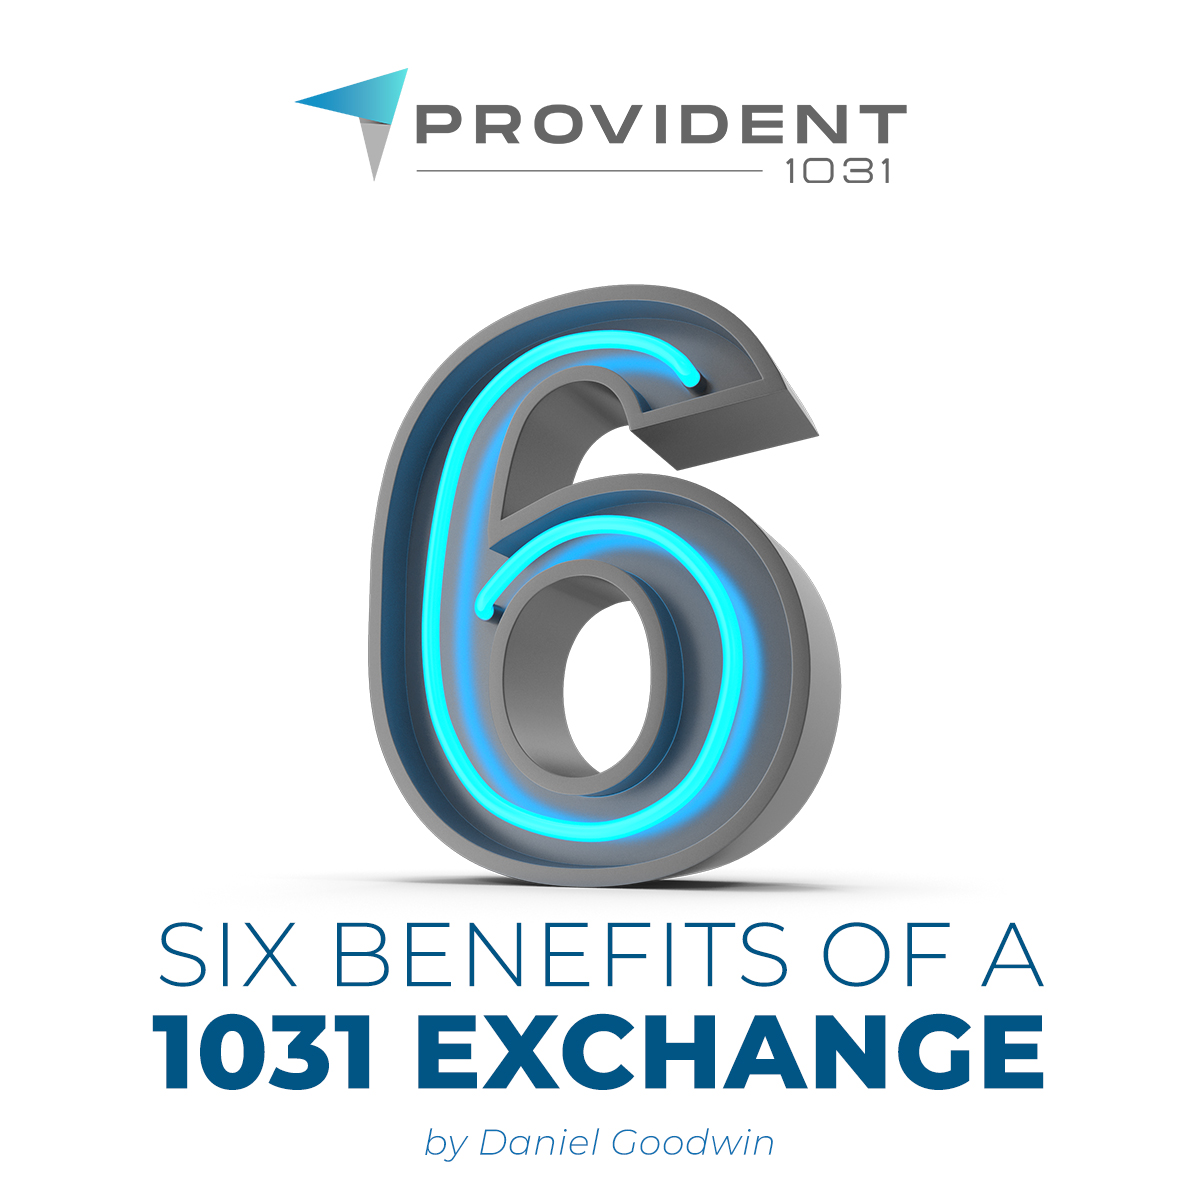 6 Benefits of a 1031 Exchange - Provident 1031 - Daniel Goodwin